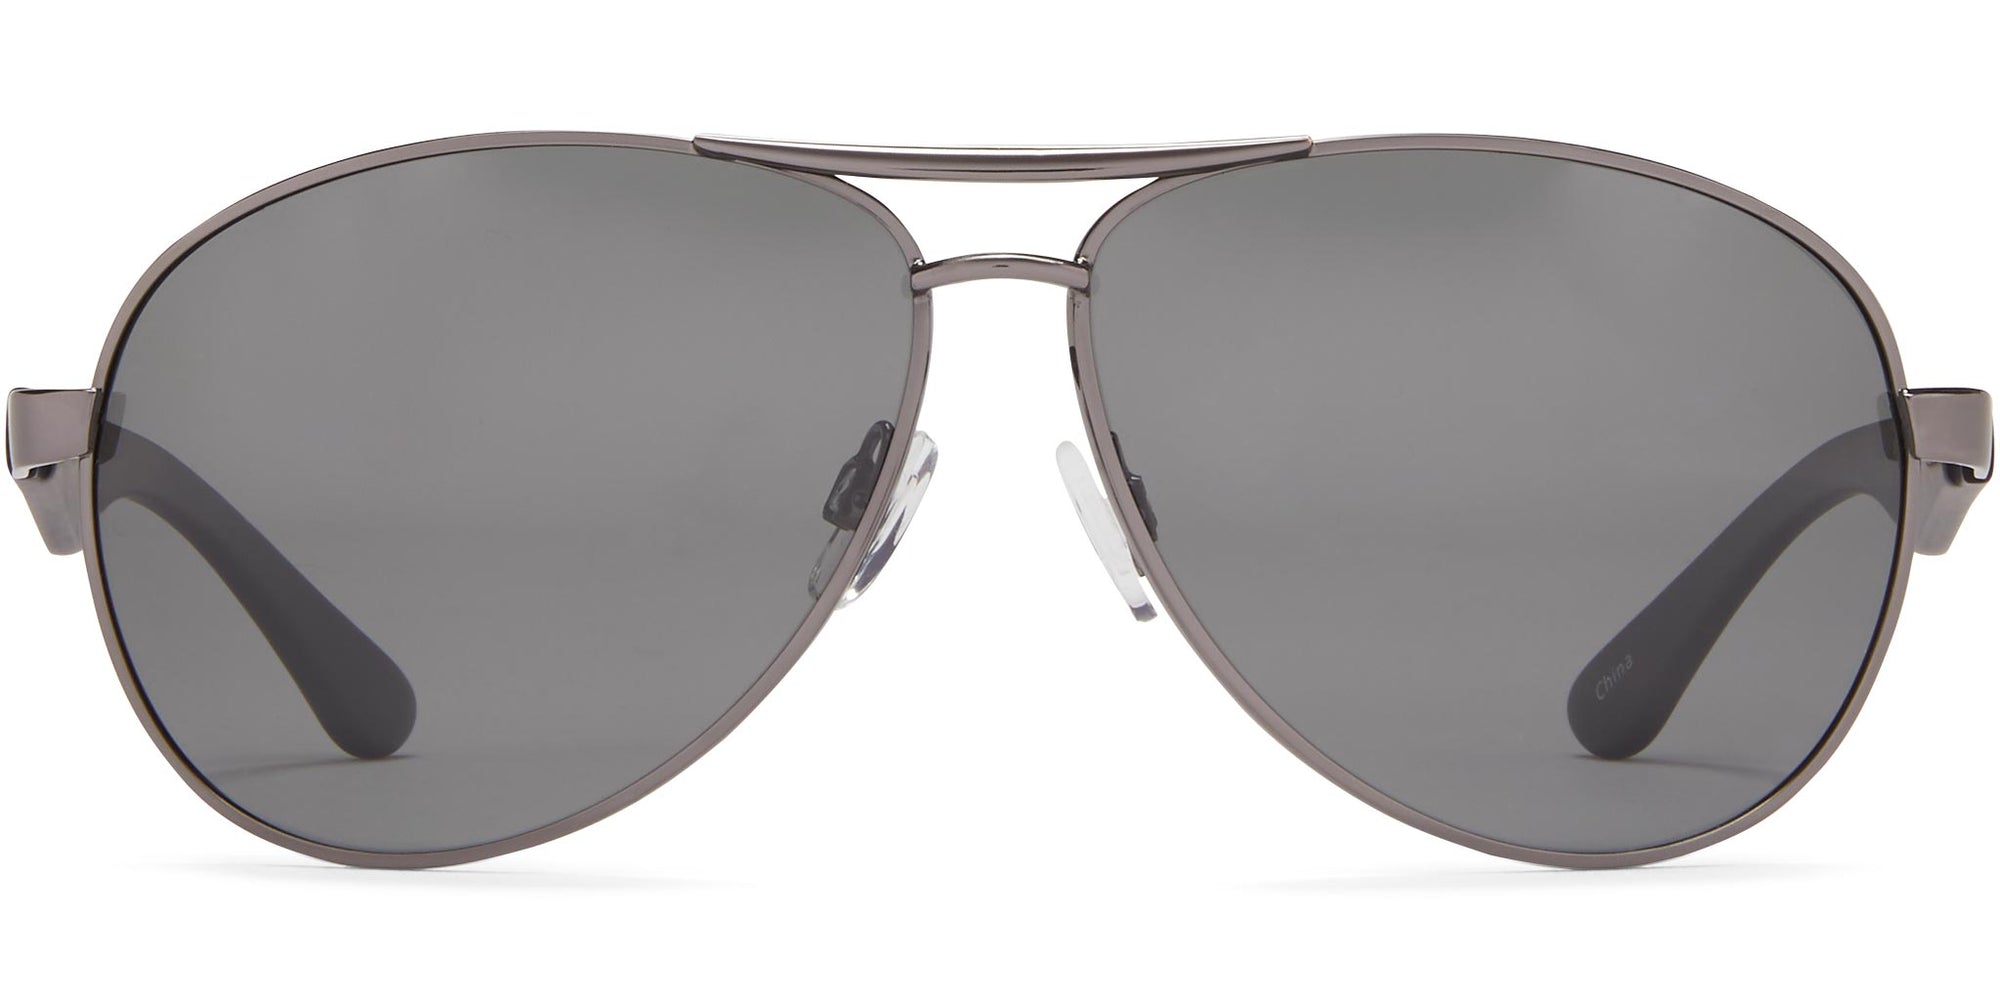 Cowell - Gunmetal/Gray Lens - Sunglasses